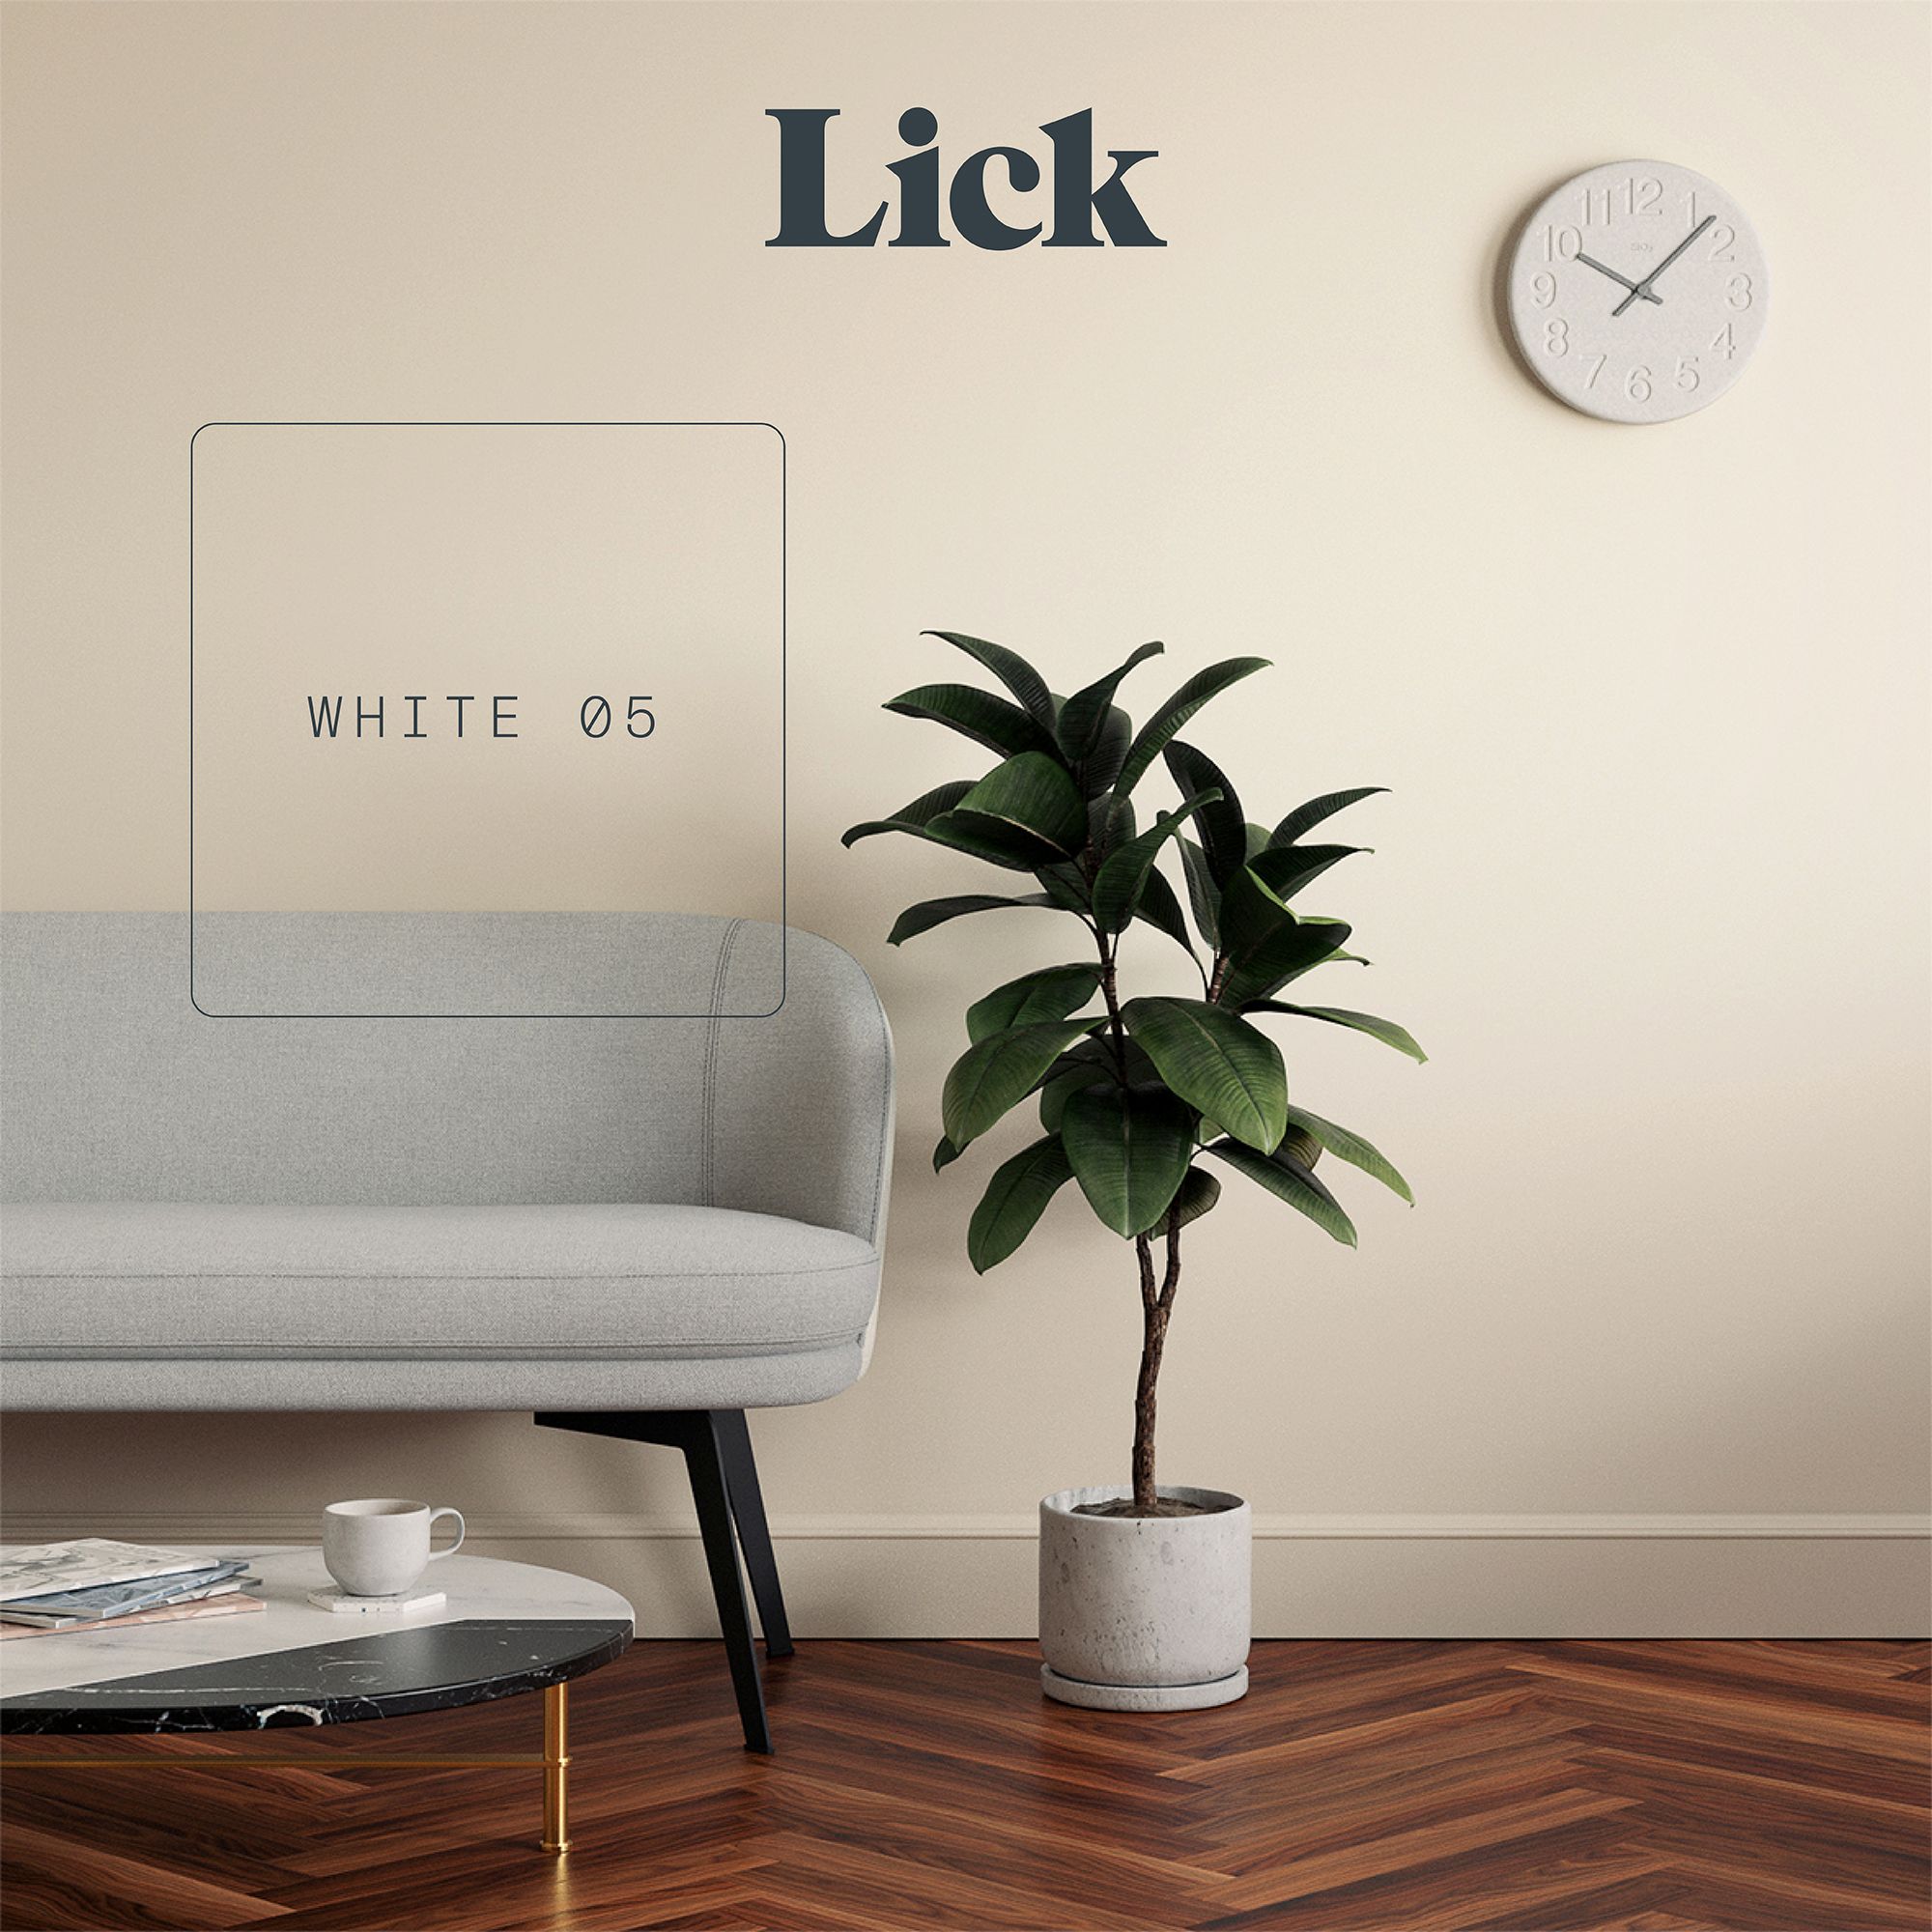 Lick White 05 Peel & stick Tester